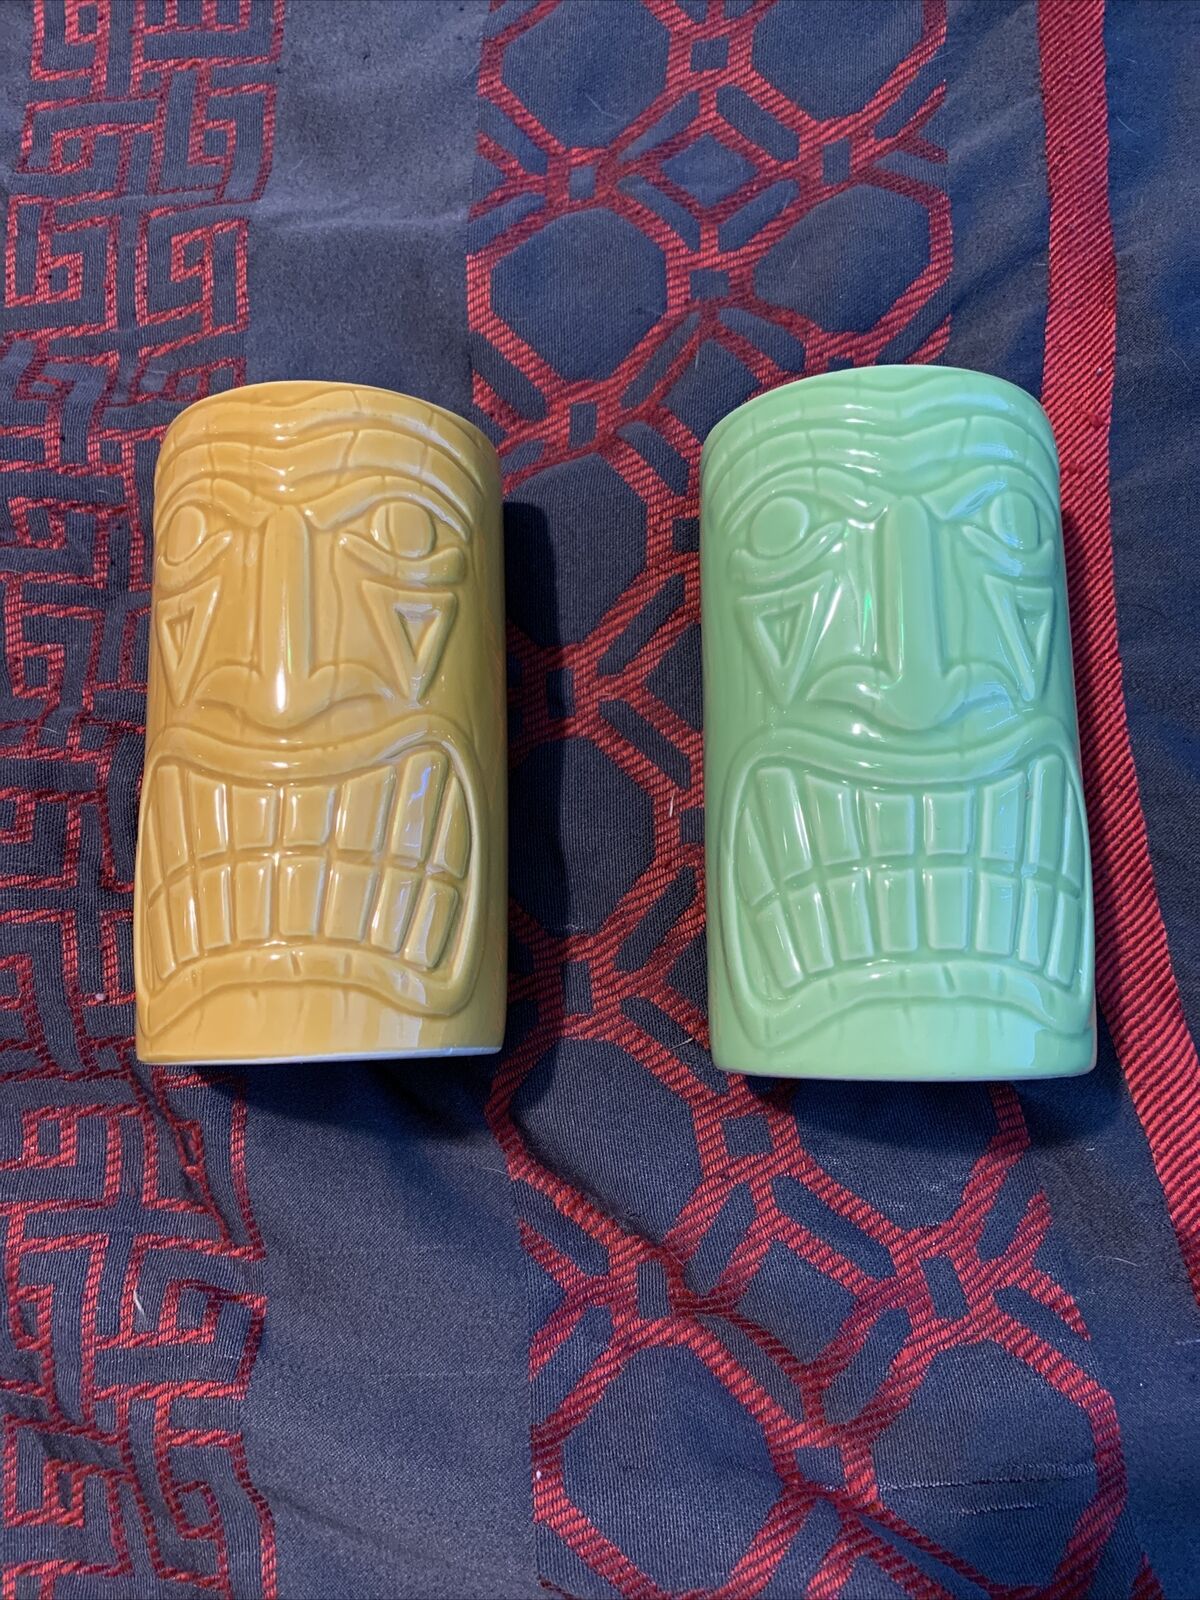 Pair of tiki mugs Rare The Beachcomber Seattle Washington mid century modern